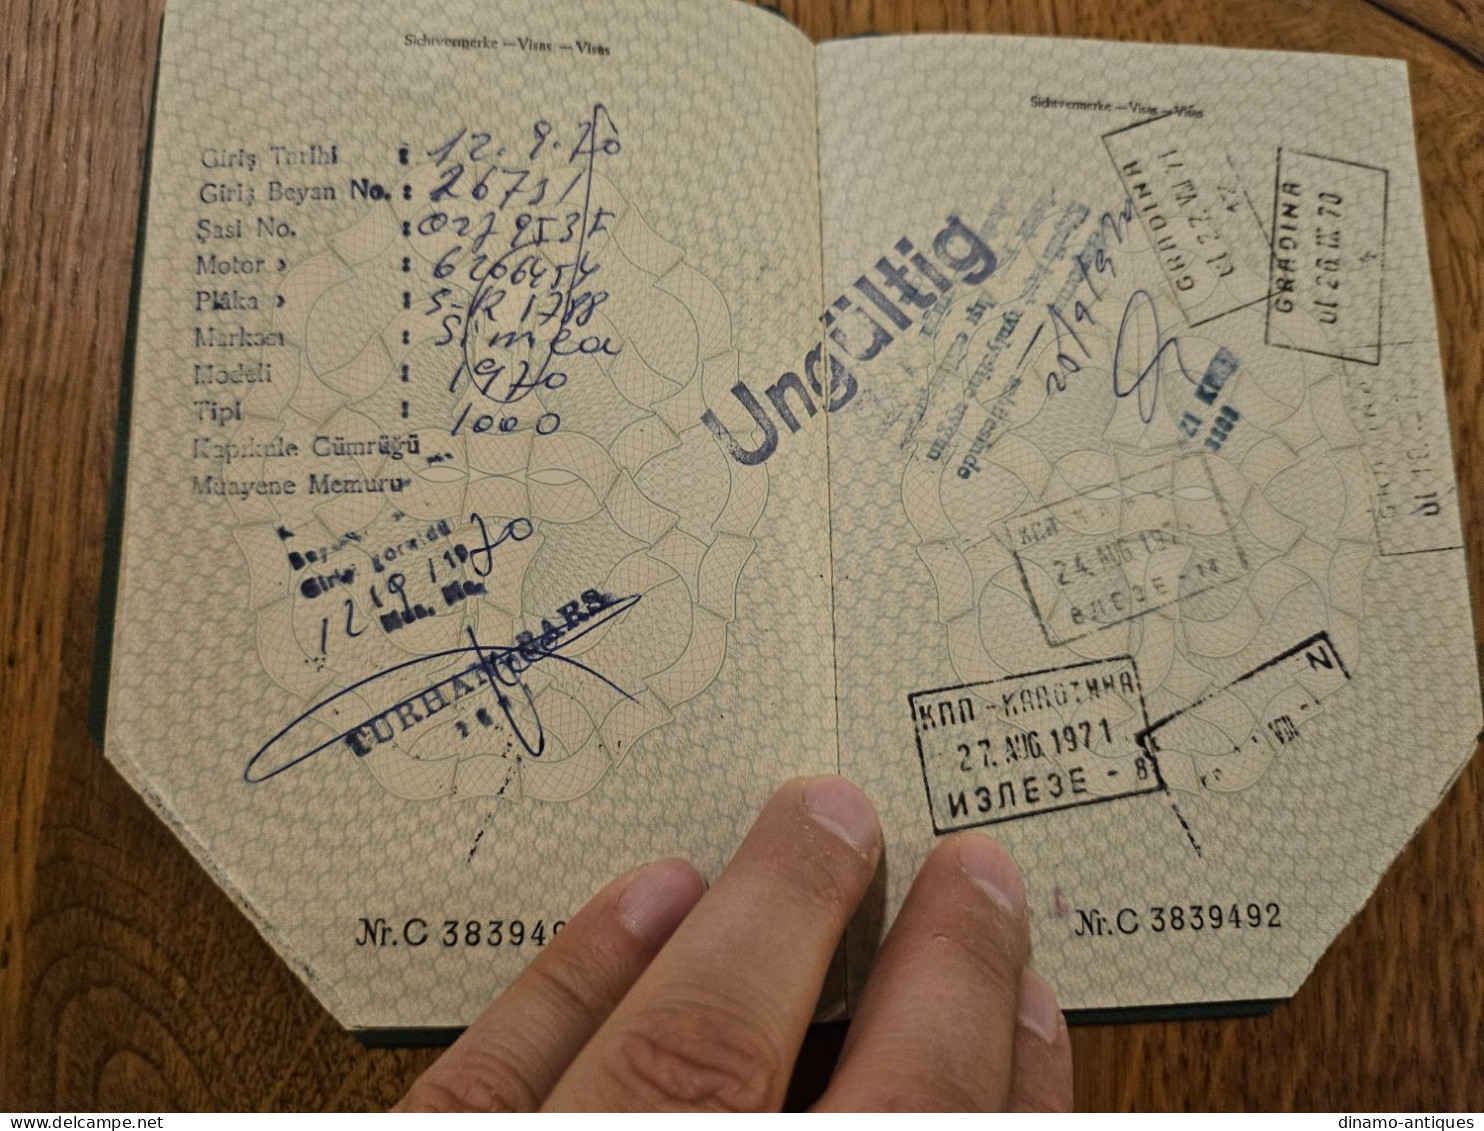 1969 Germany passport reisepass issued in Stuttgart - full of DDR Turkey Greece Bulgaria Yugoslavia Czechoslovakia visas